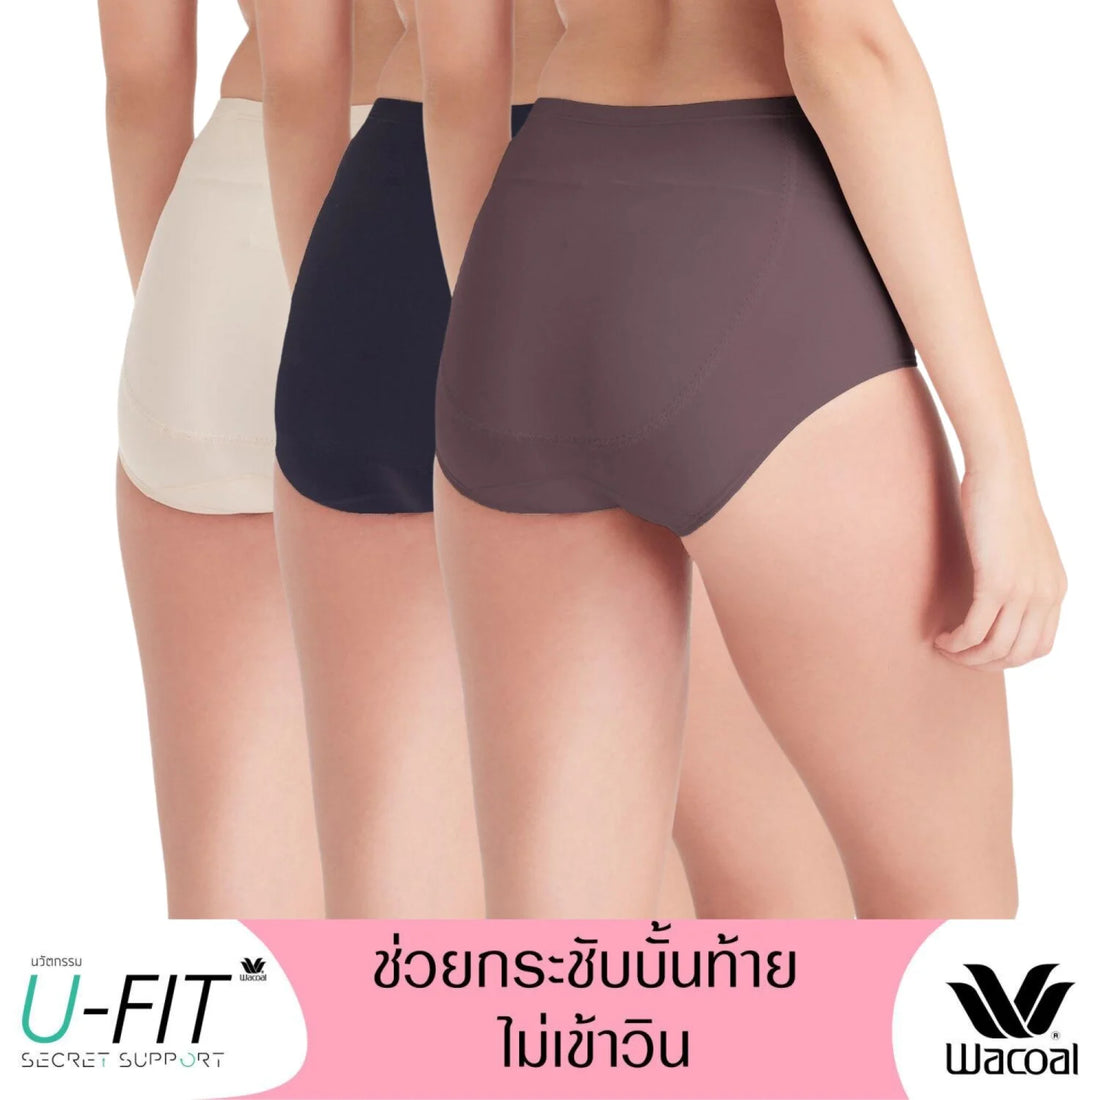 Wacoal H-fit secret support seamless underwear, full shape, Set of